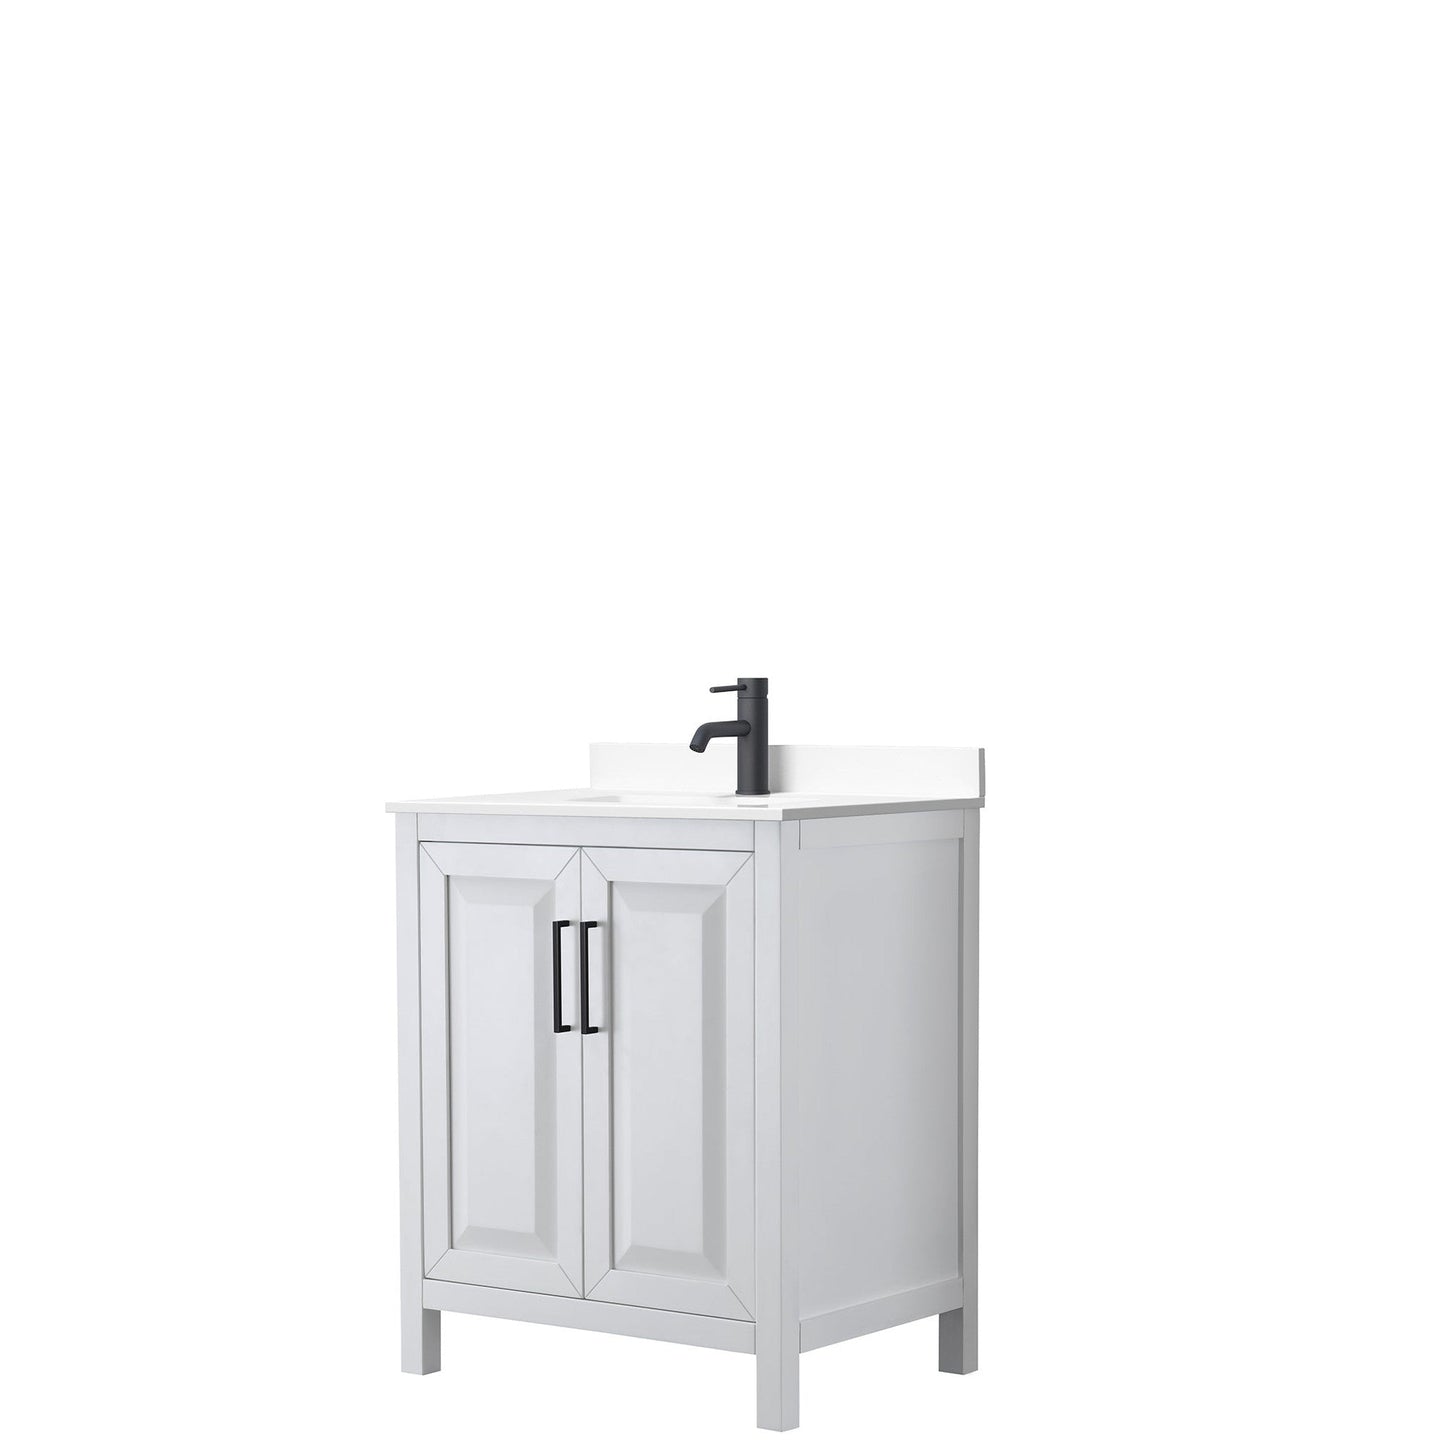 Daria 30" Single Bathroom Vanity in White, White Cultured Marble Countertop, Undermount Square Sink, Matte Black Trim